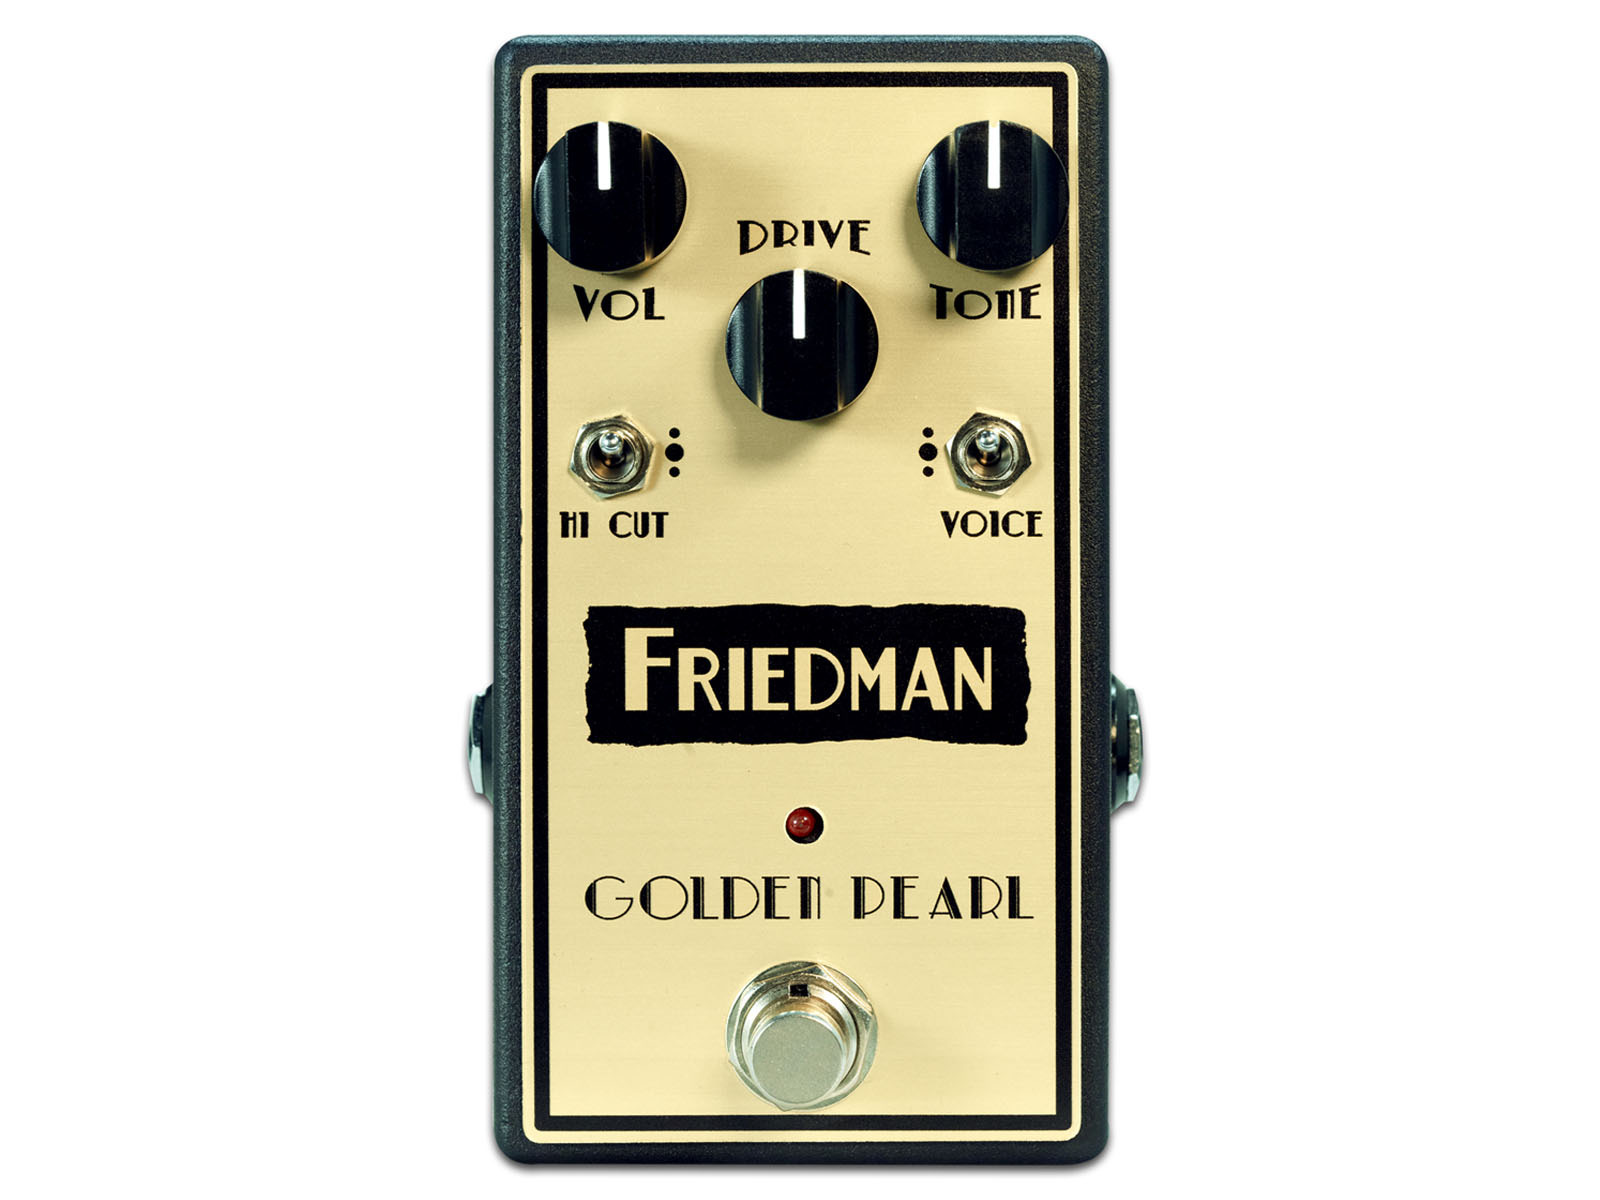 Friedman Amplification Golden Pearl Overdrive - Overdrive, distortion & fuzz effect pedal - Variation 1